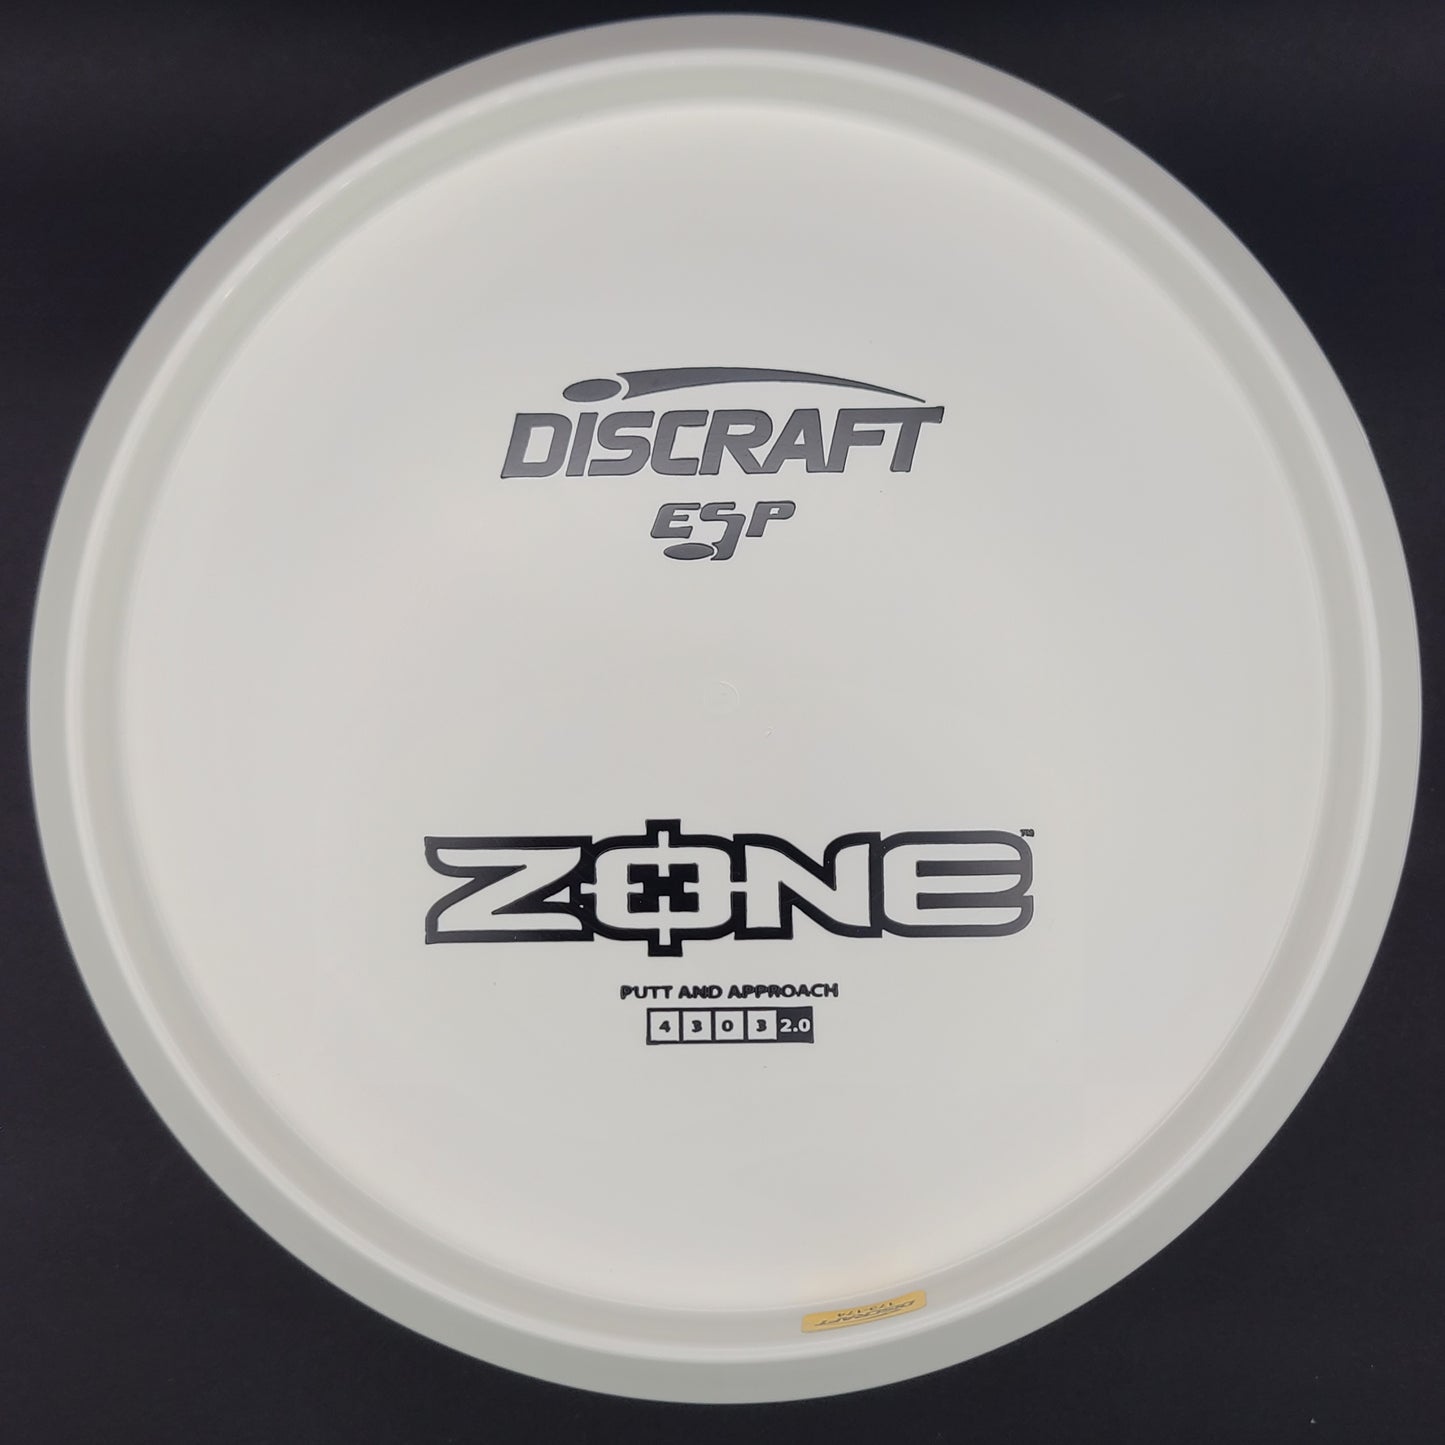 Discraft - Zone - ESP Bottom Stamp